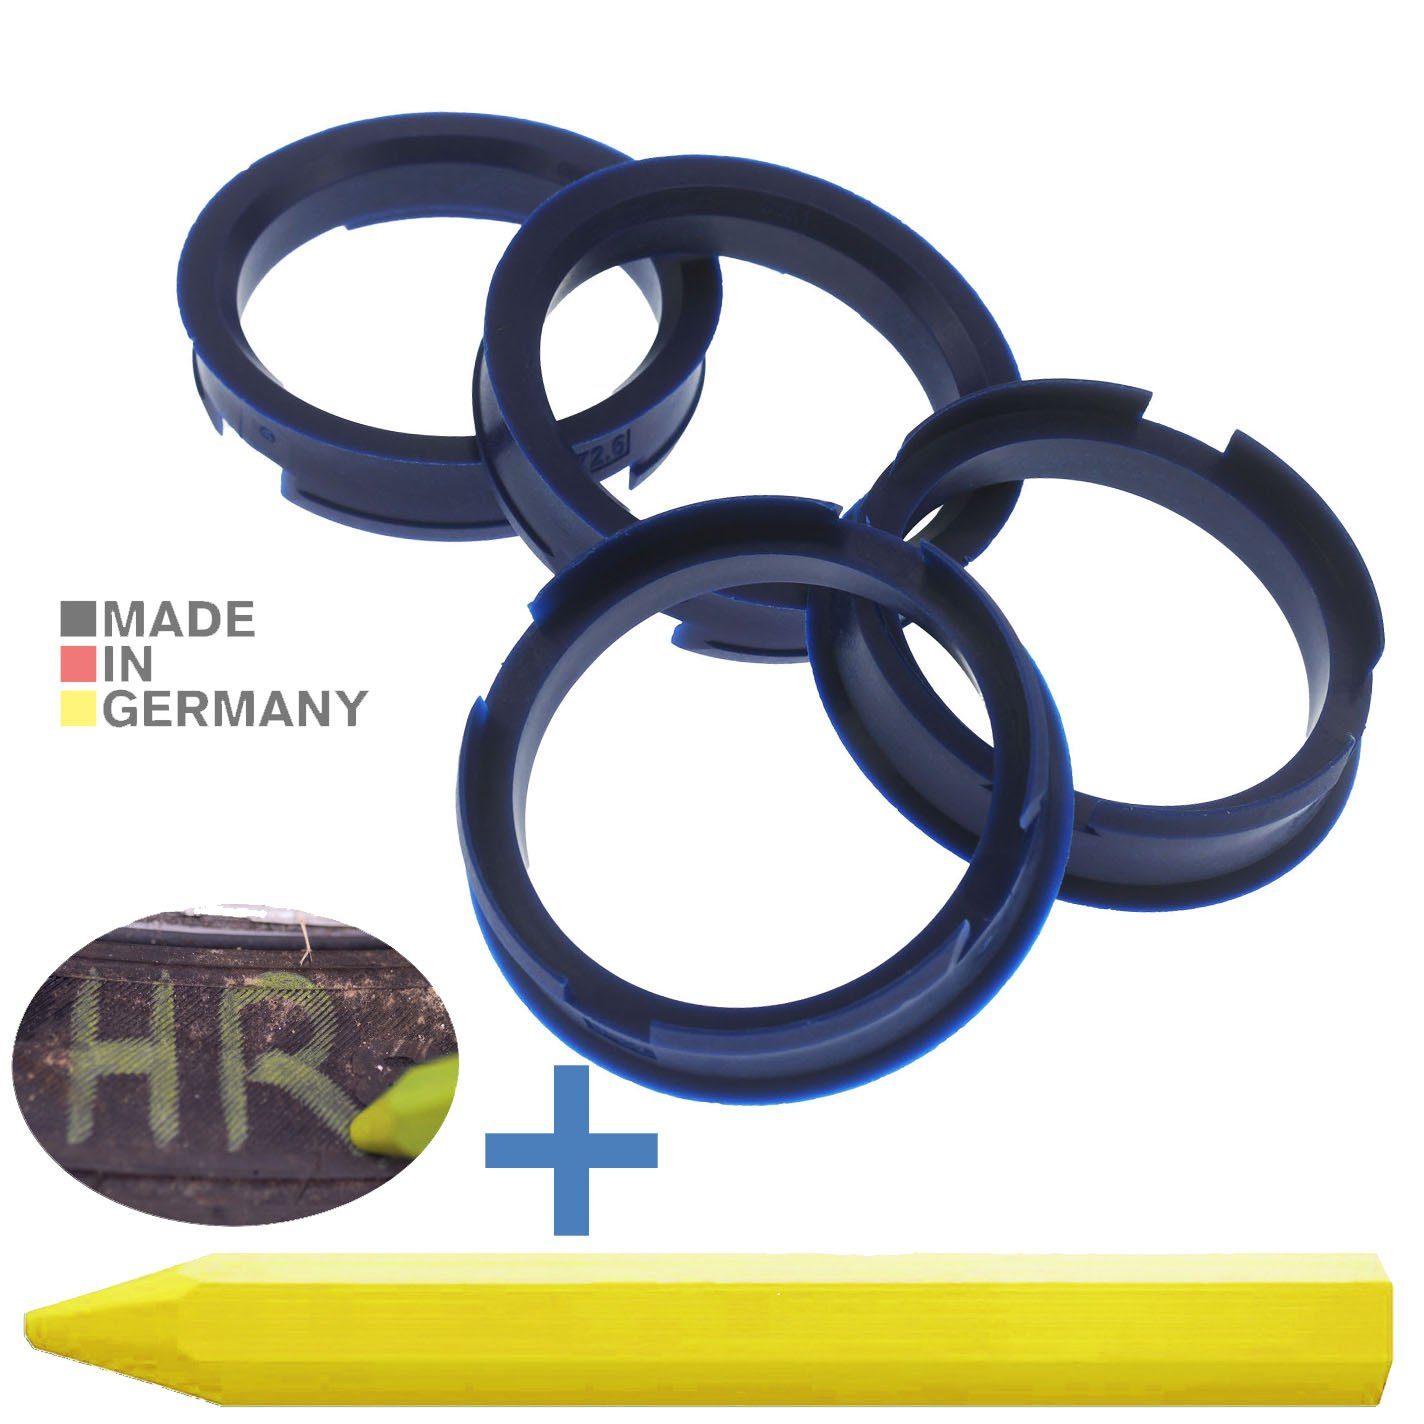 RKC Reifenstift 4X Zentrierringe Dunkelblau Felgen Ringe + 1x Reifen Kreide Fett Stift, Maße: 72,6 x 60,1 mm